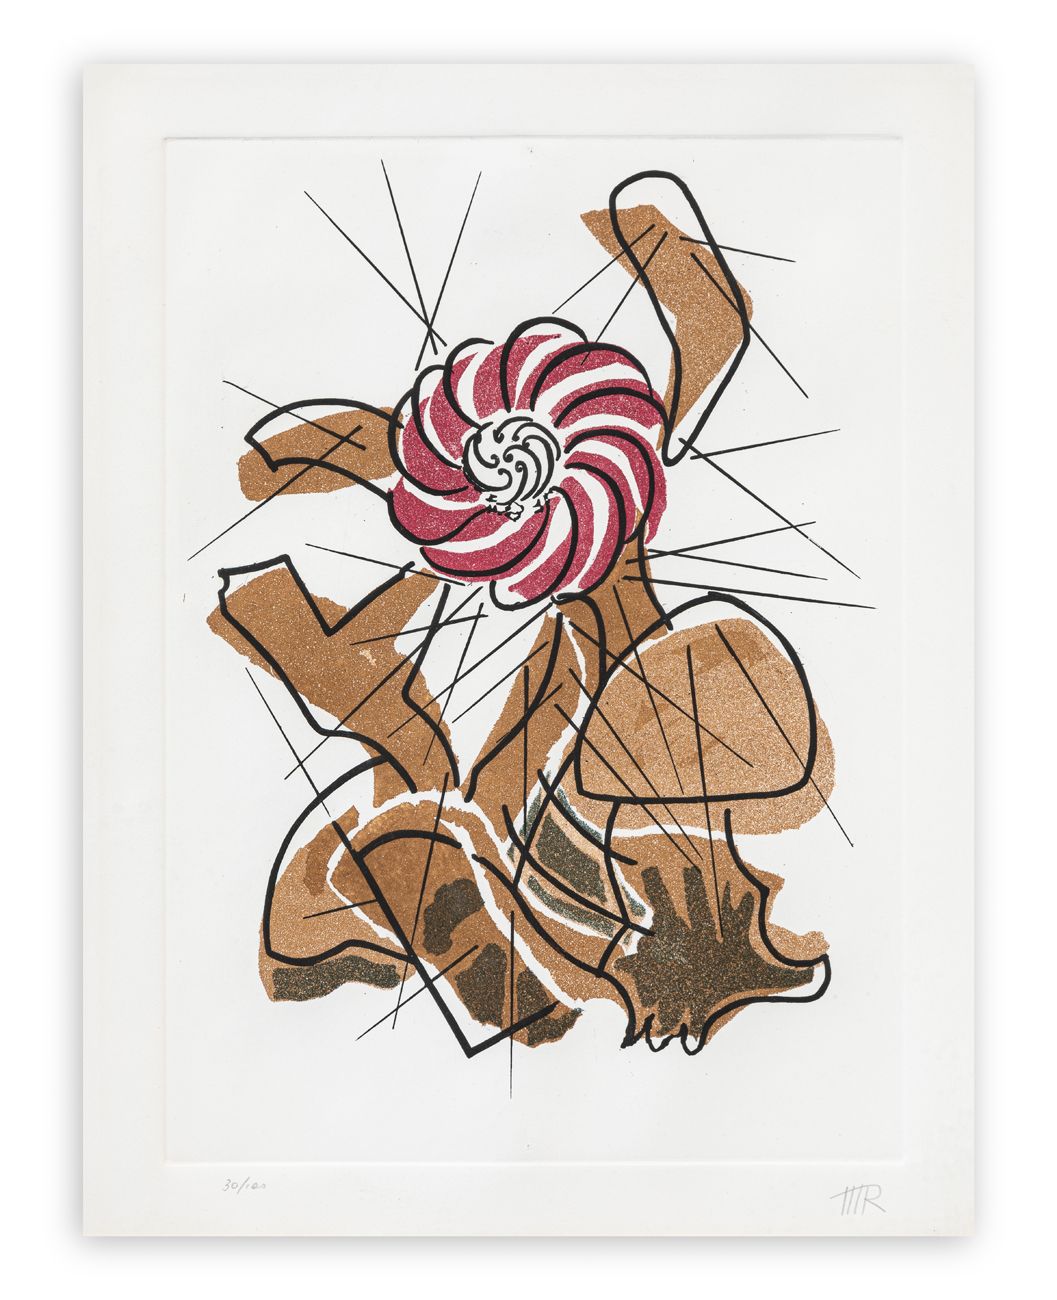 MAN RAY (1890-1976) - Cactus Dansant, 1976 Gravure
Feuille 43x31 cm
Feuille visi&hellip;